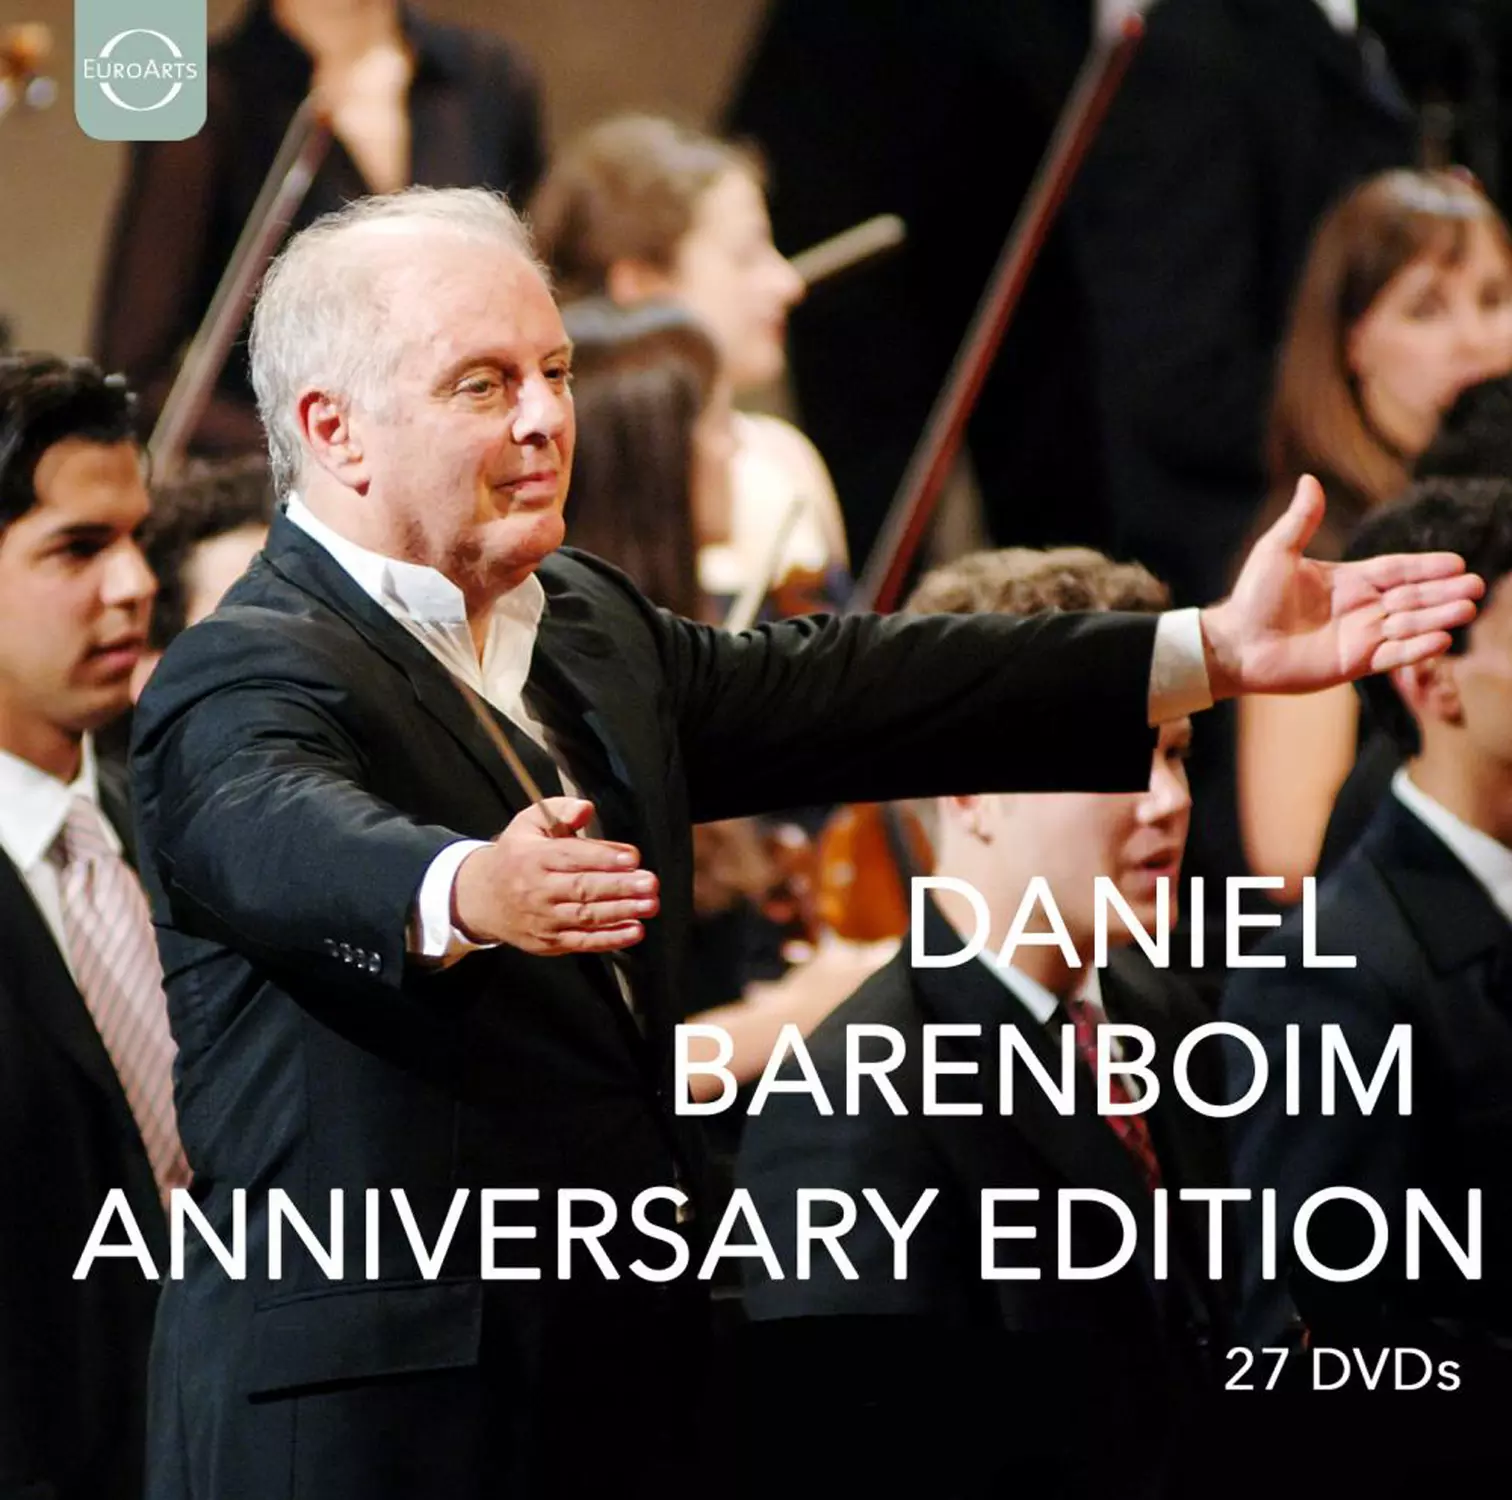 The Daniel Barenboim Anniversary Edition